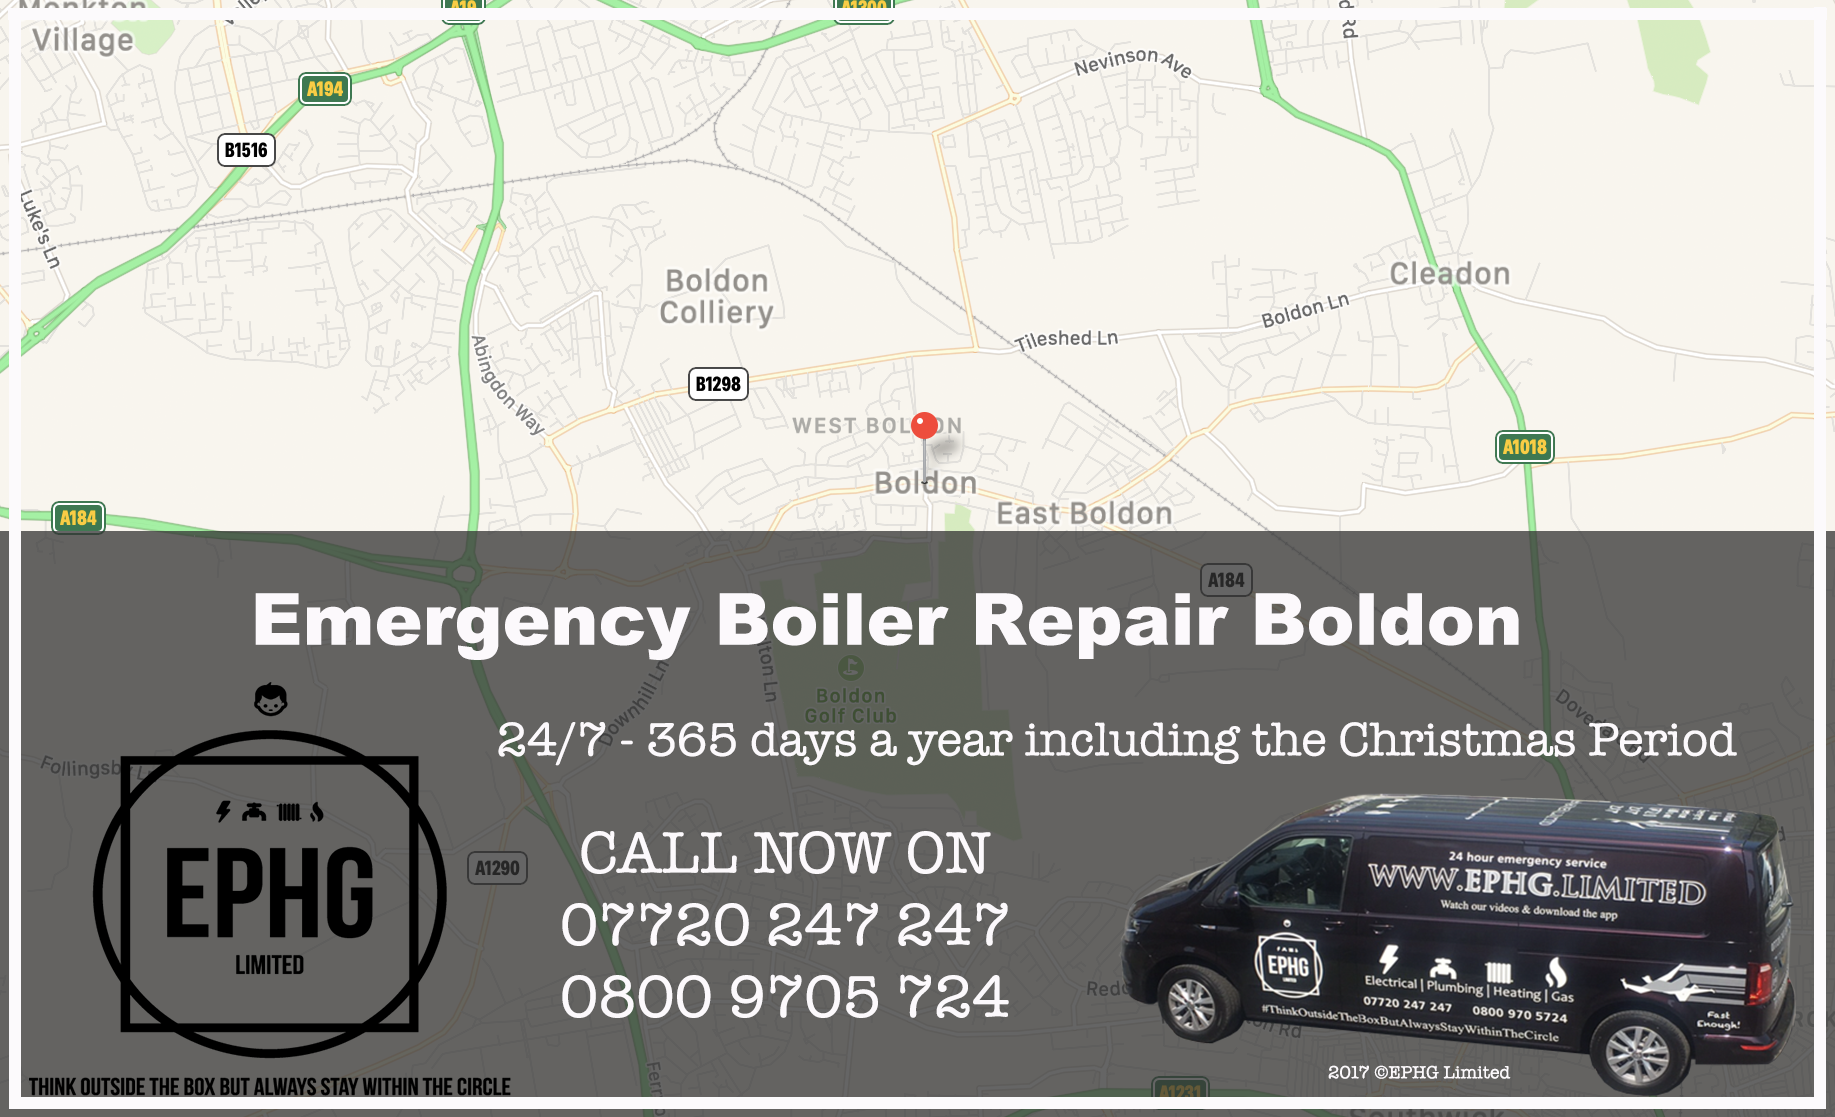 24 Hour Emergency Boiler Repair Boldon